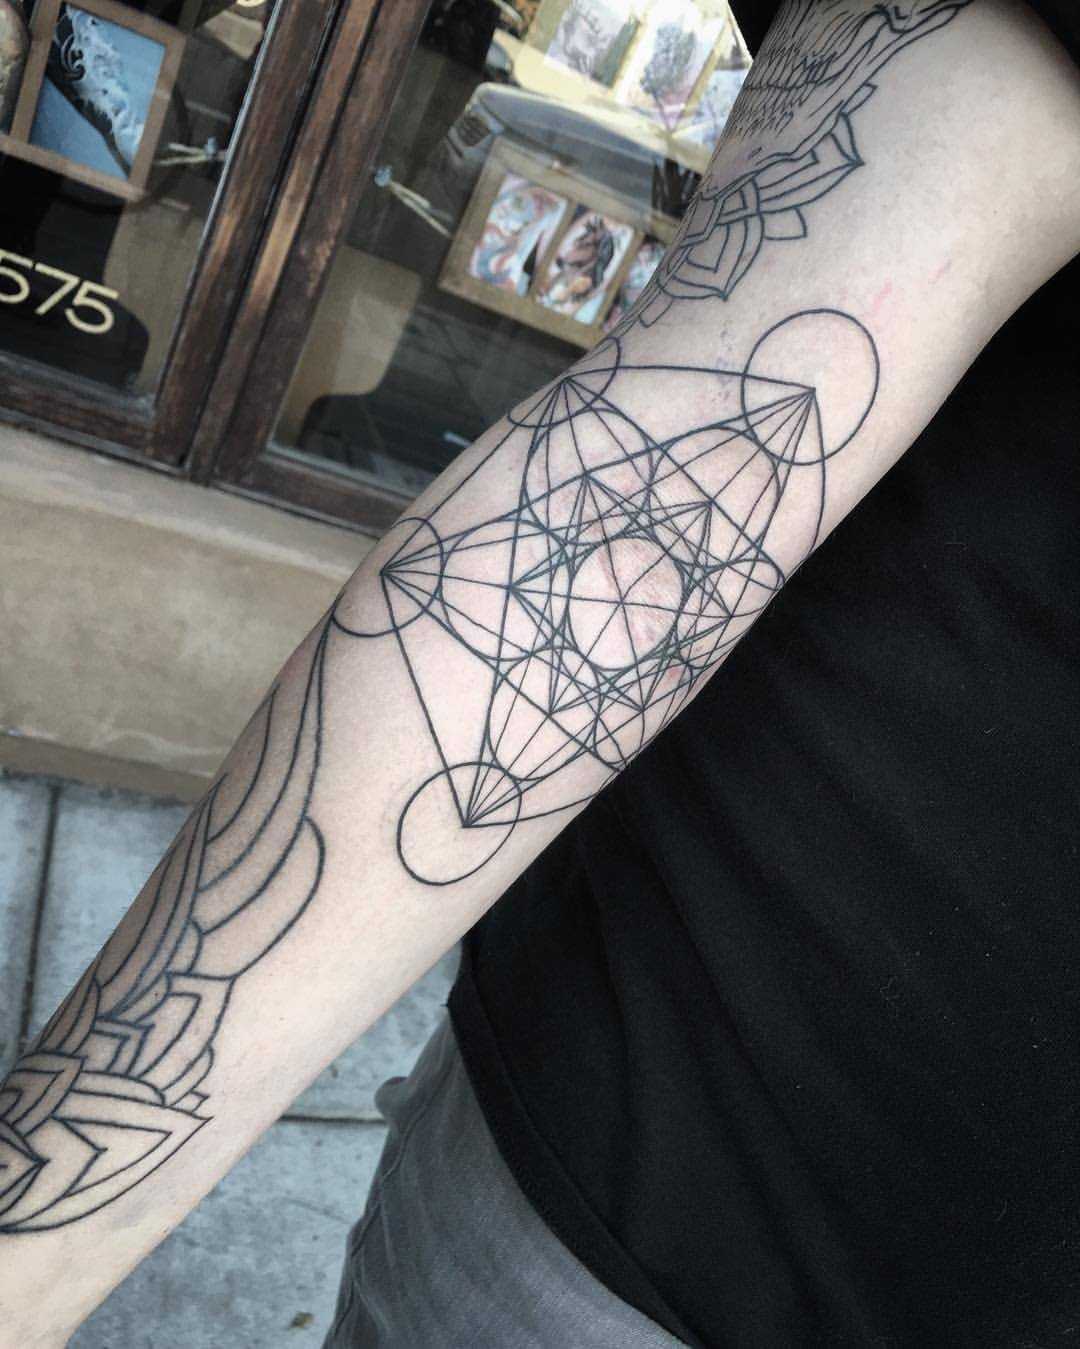 Metatron’s cube tattoo on the arm